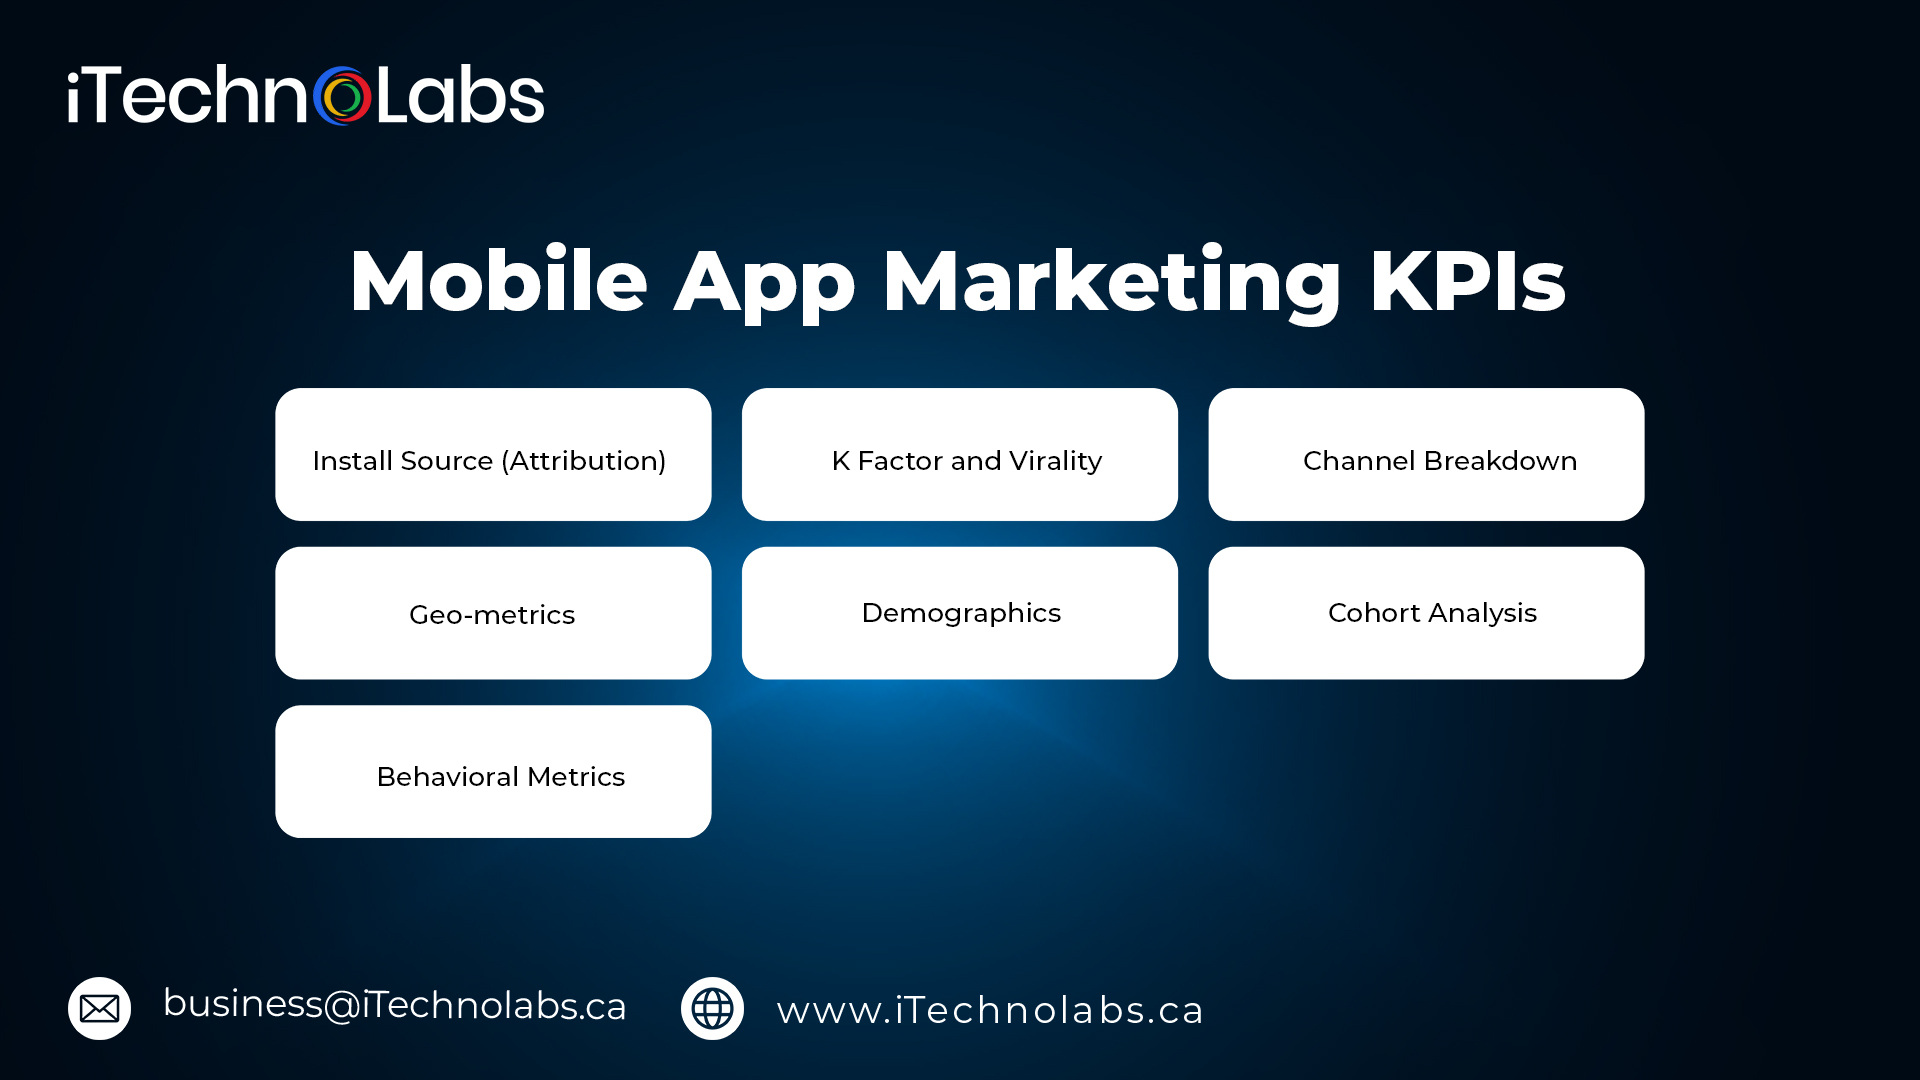 mobile app marketing kpis itechnolabs